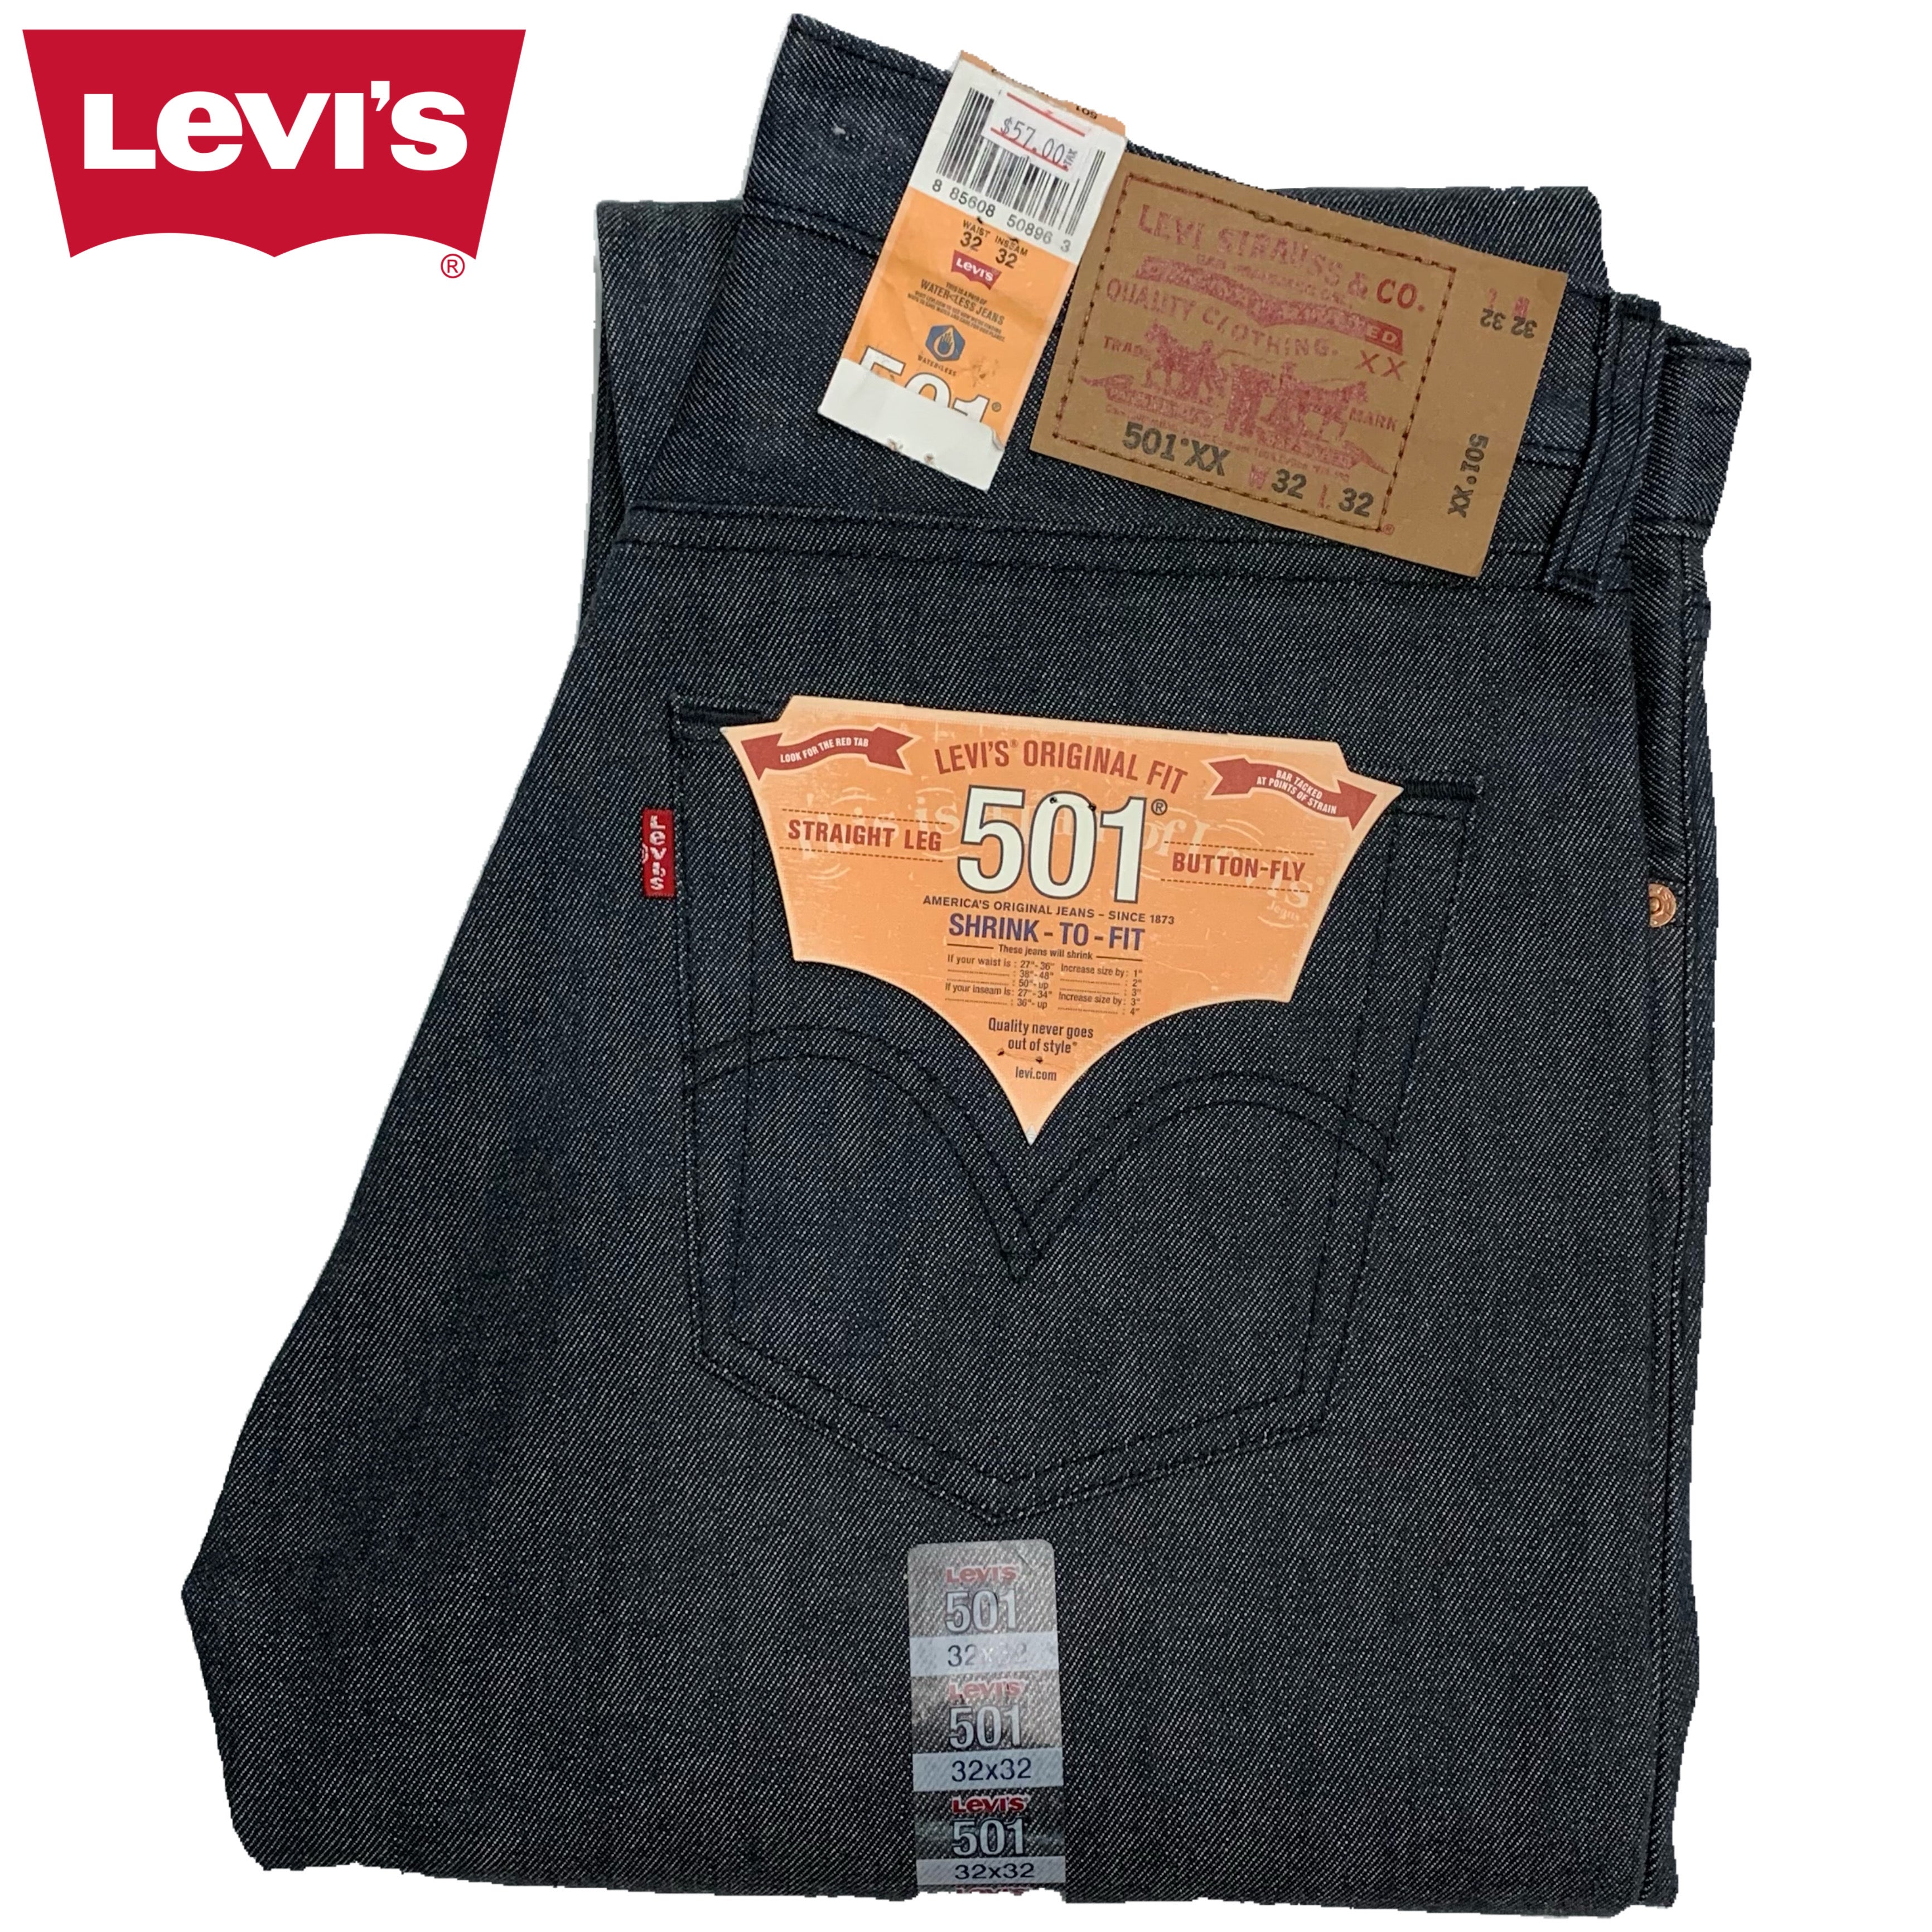 Levi's 501 Charcoal Grey - 0987